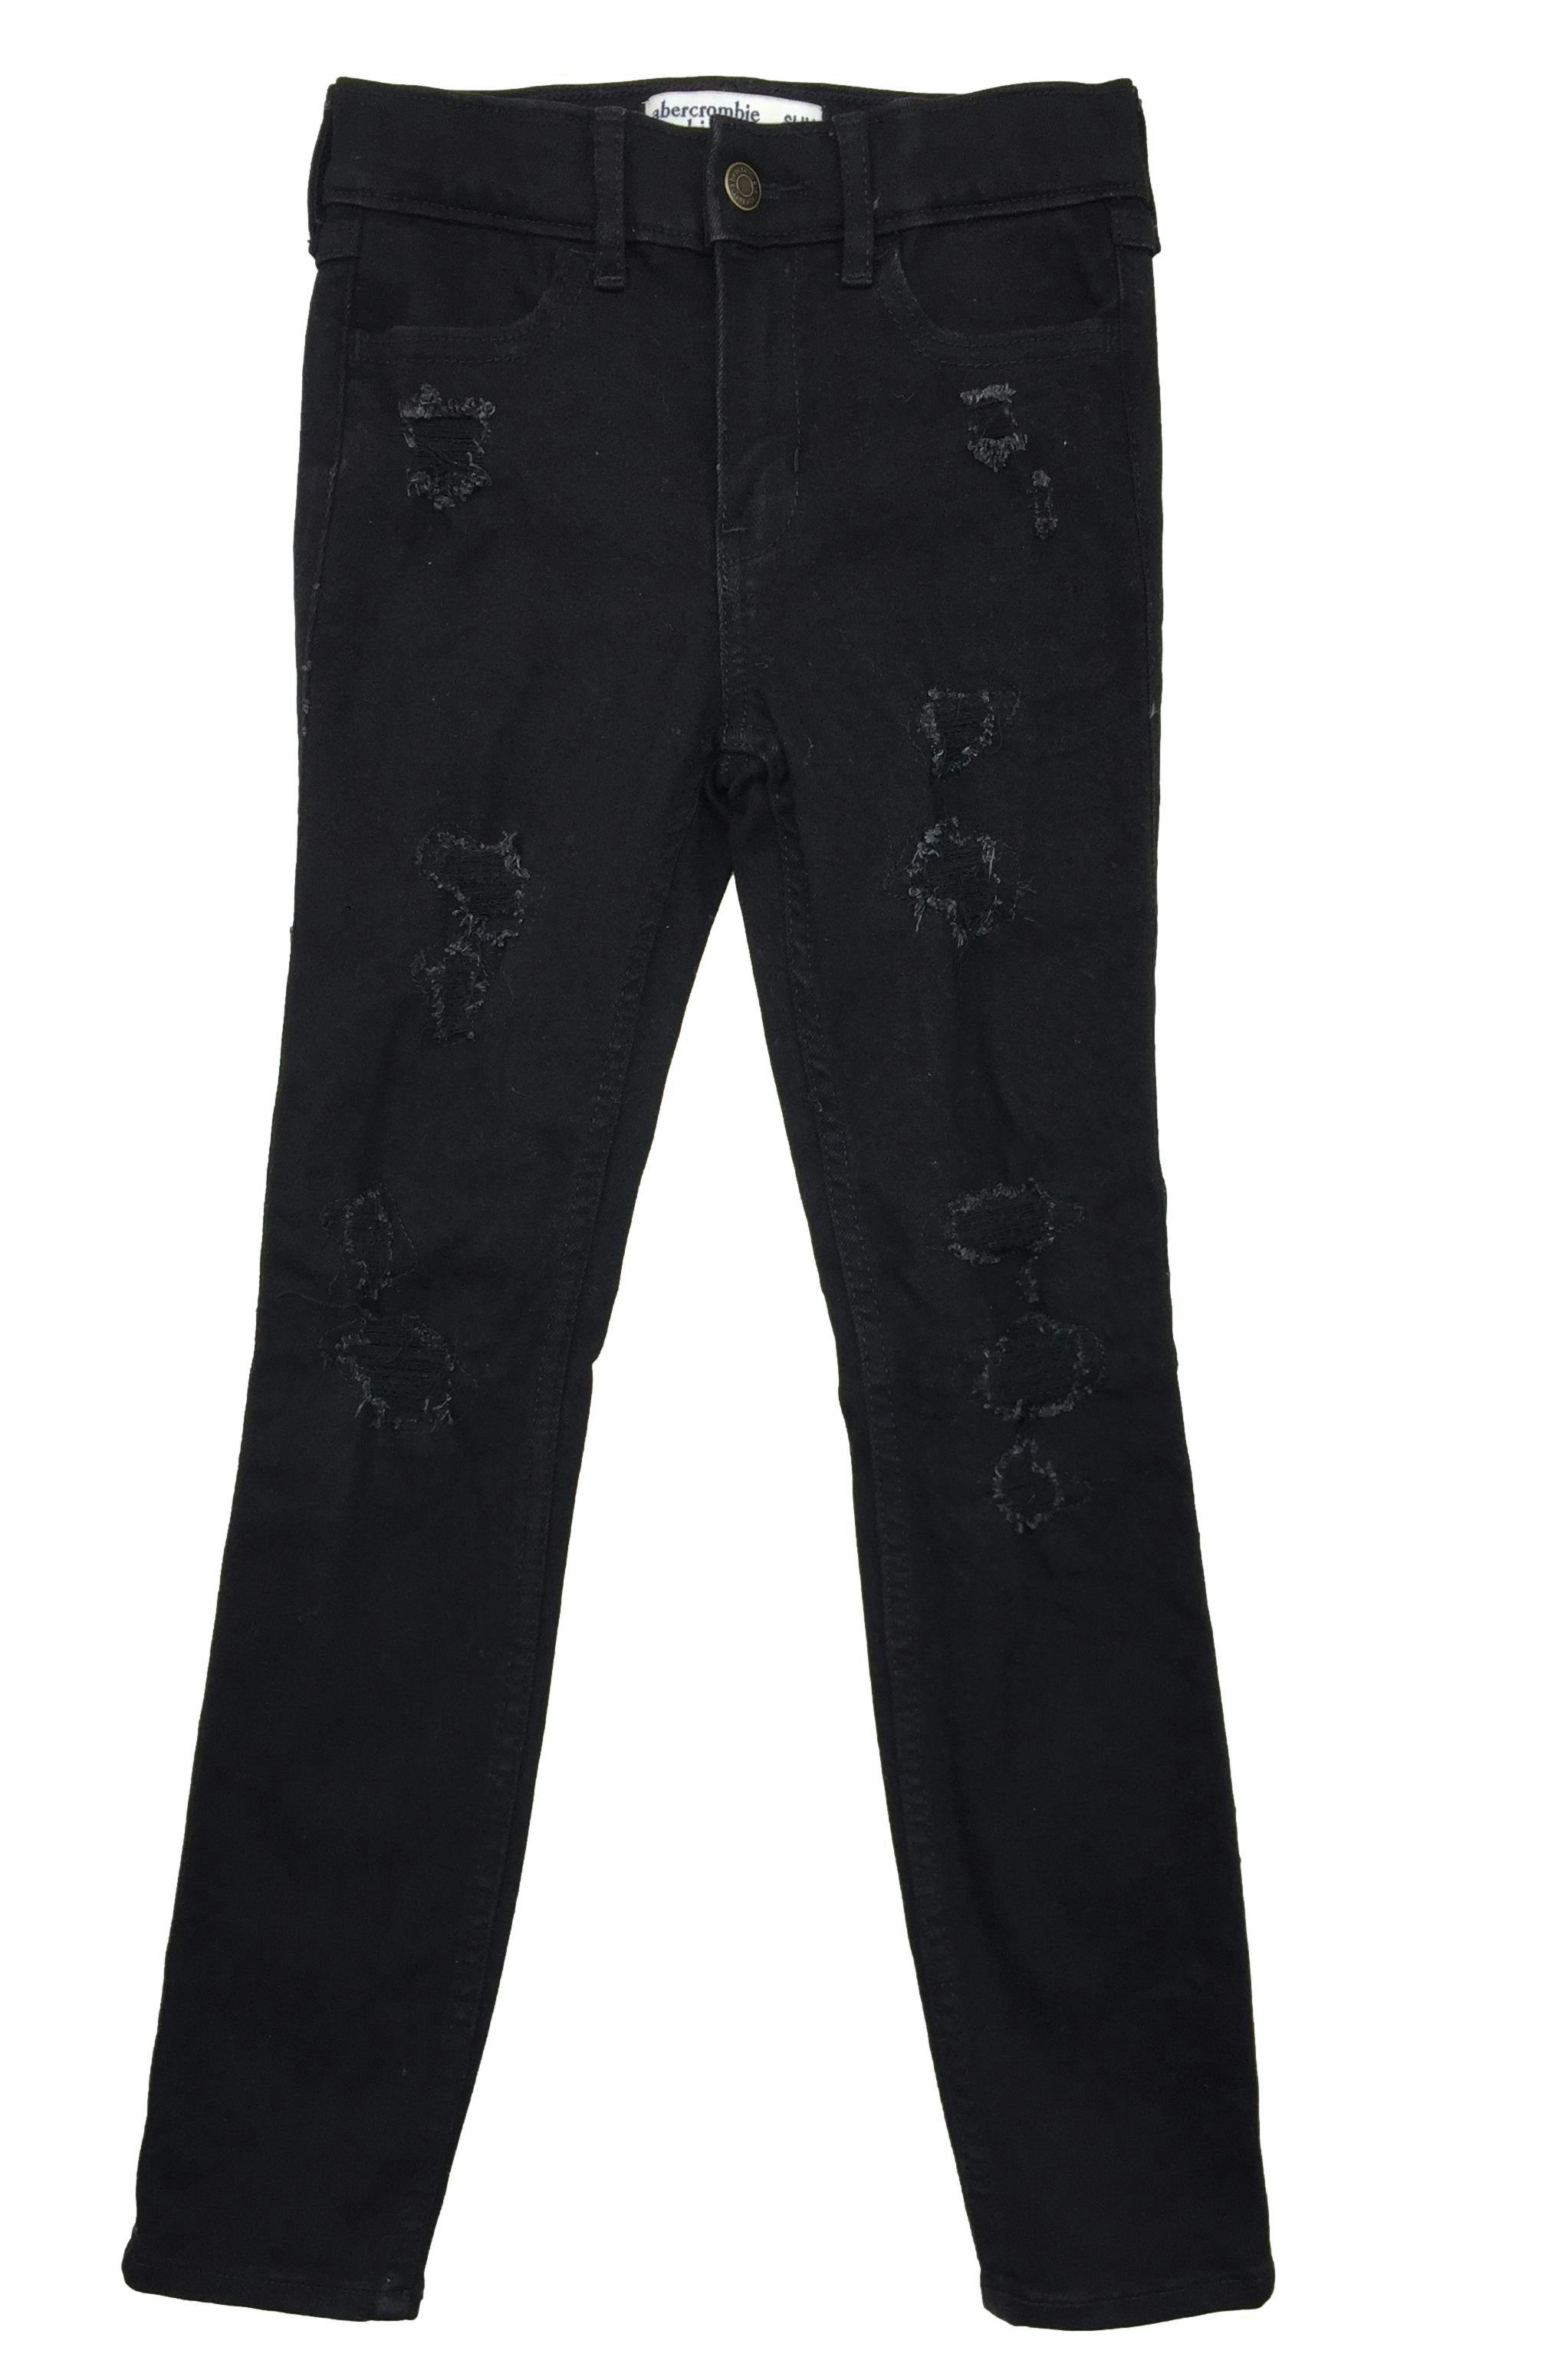 Pantalón jean negro Abercrombie con detalles rasgados.